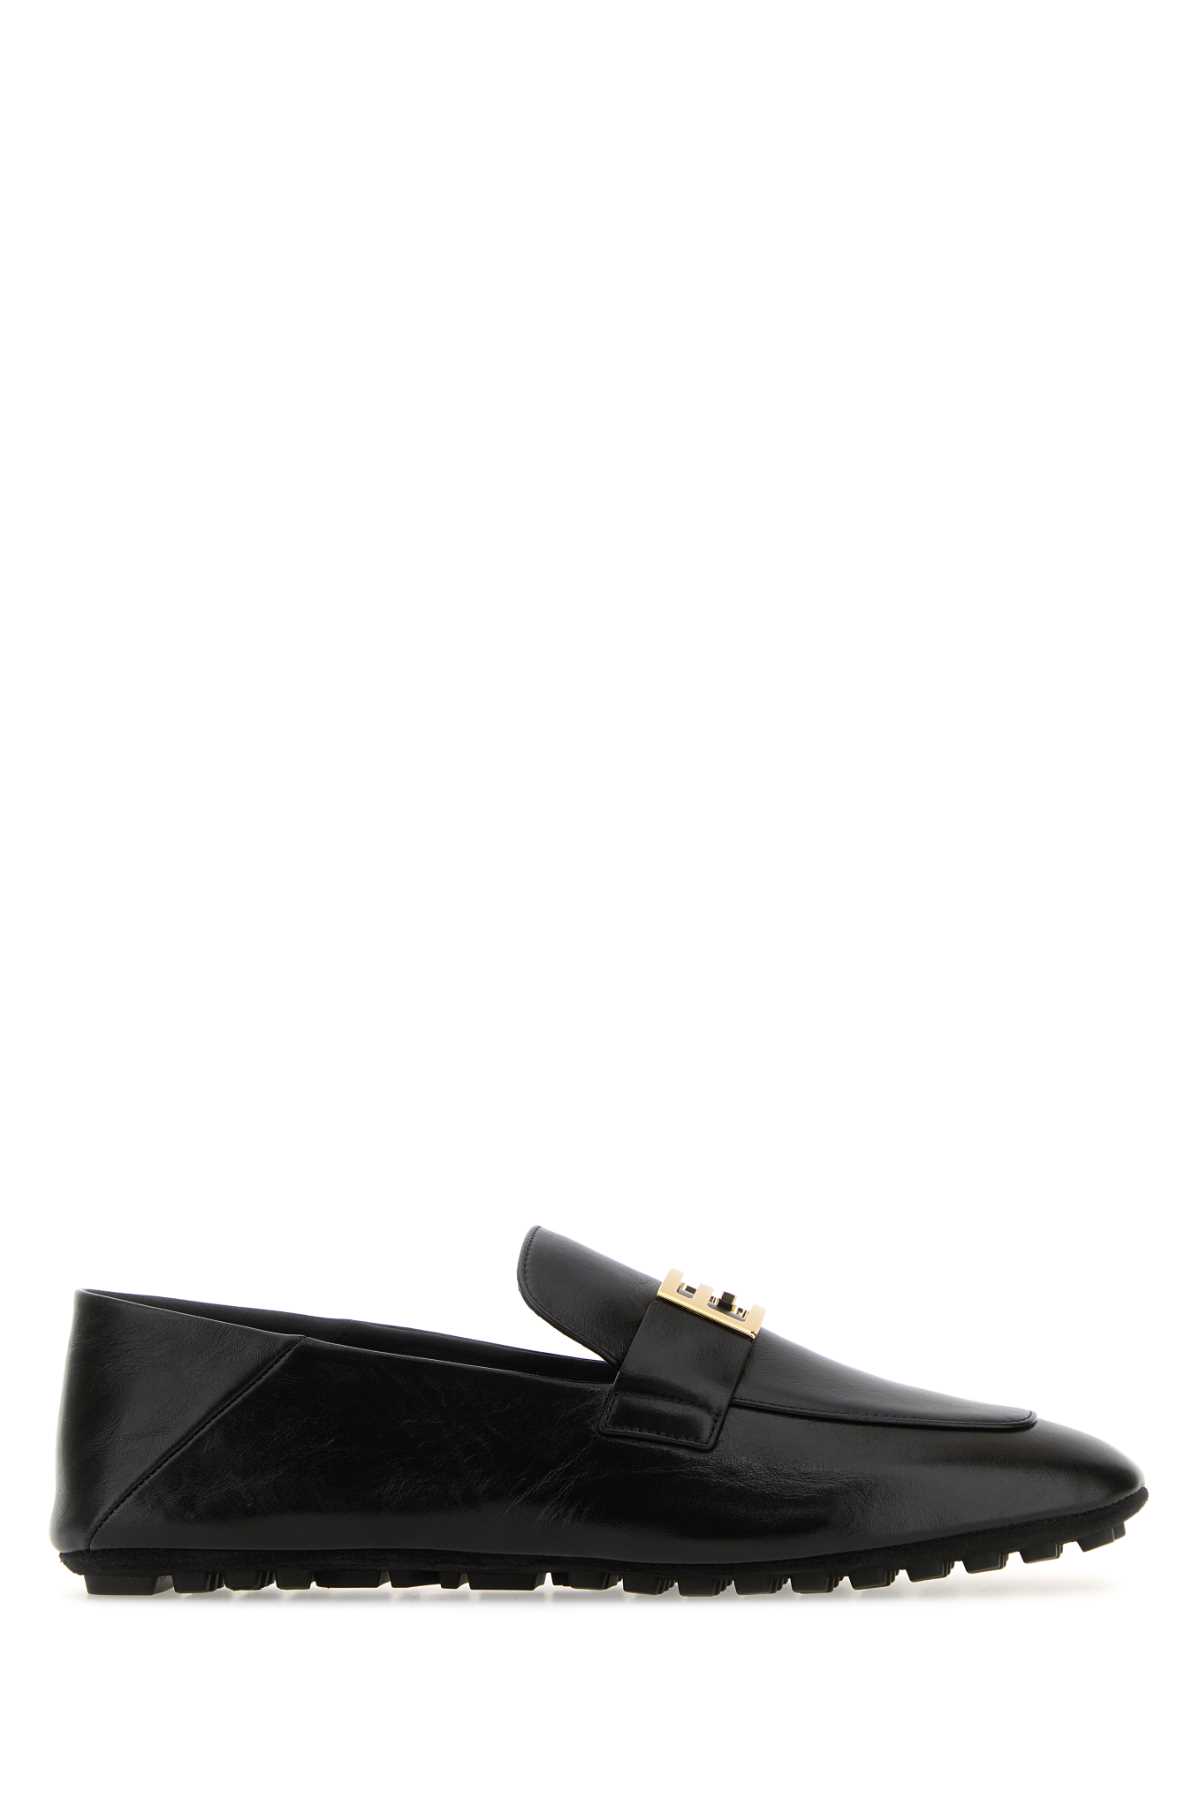 Shop Fendi Black Leather Baguette Loafers